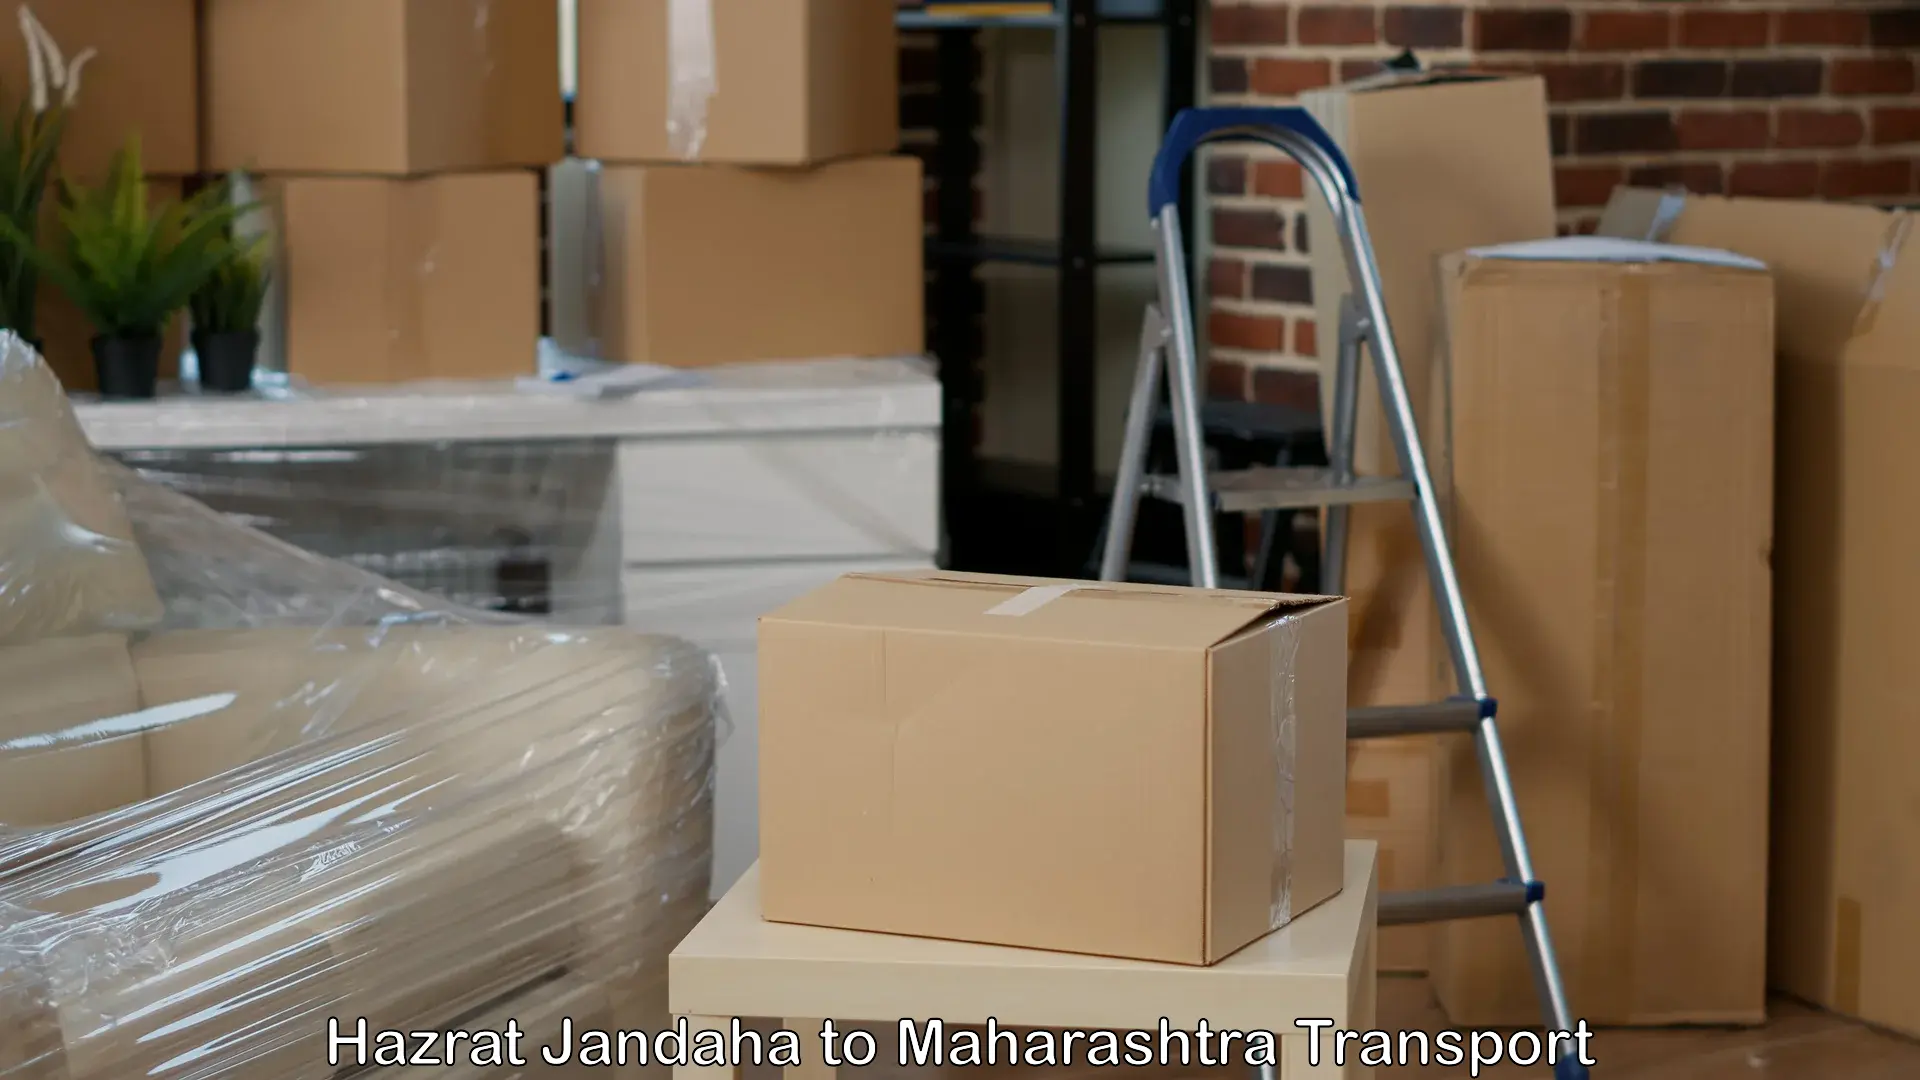 Truck transport companies in India Hazrat Jandaha to Alephata